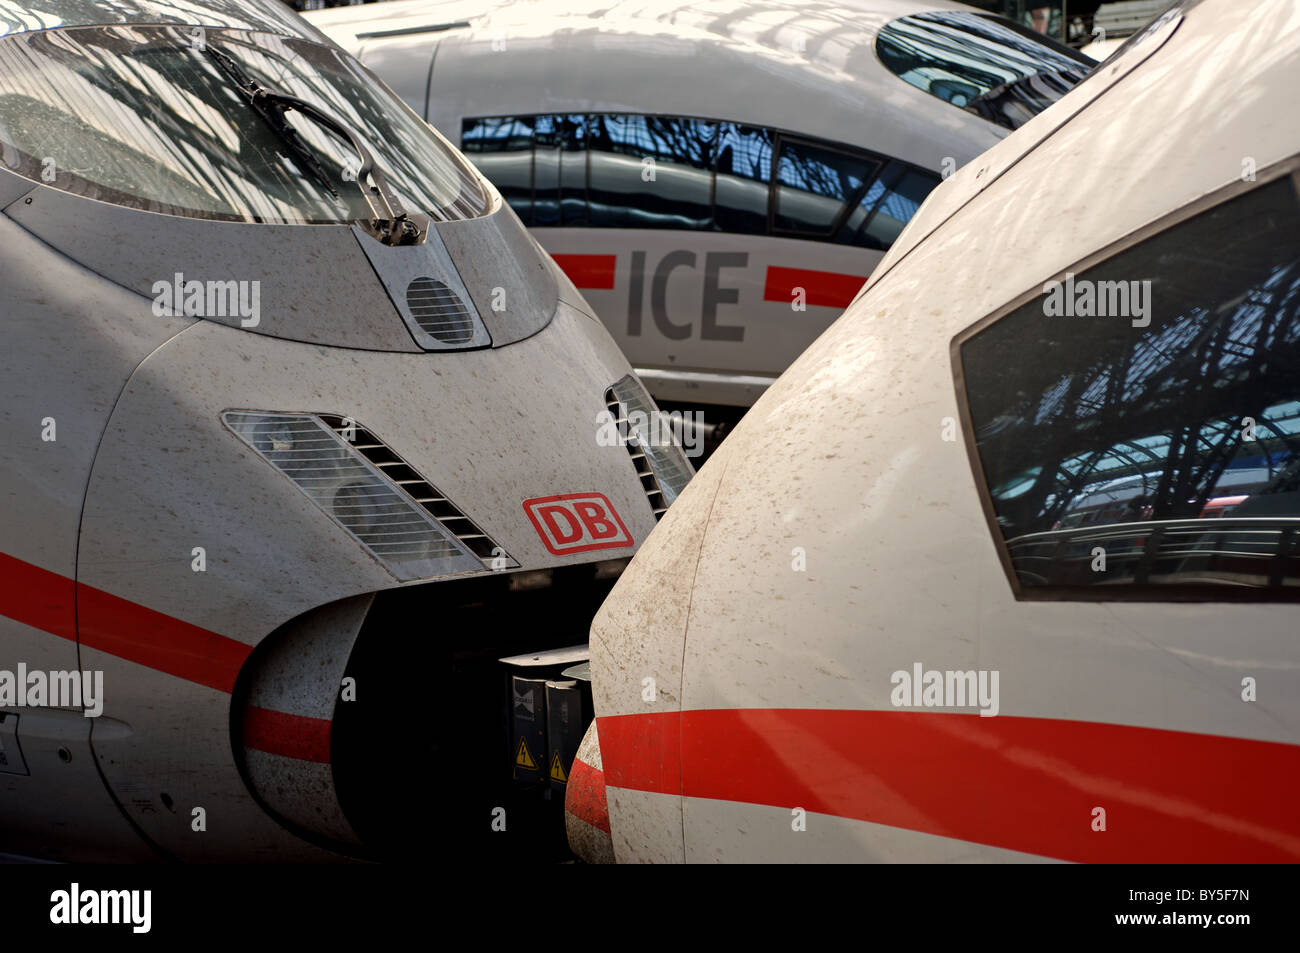 Germany Railways (Deutsche Bahn) inter-city express (ICE) passenger trains, Cologne, Germany. Stock Photo